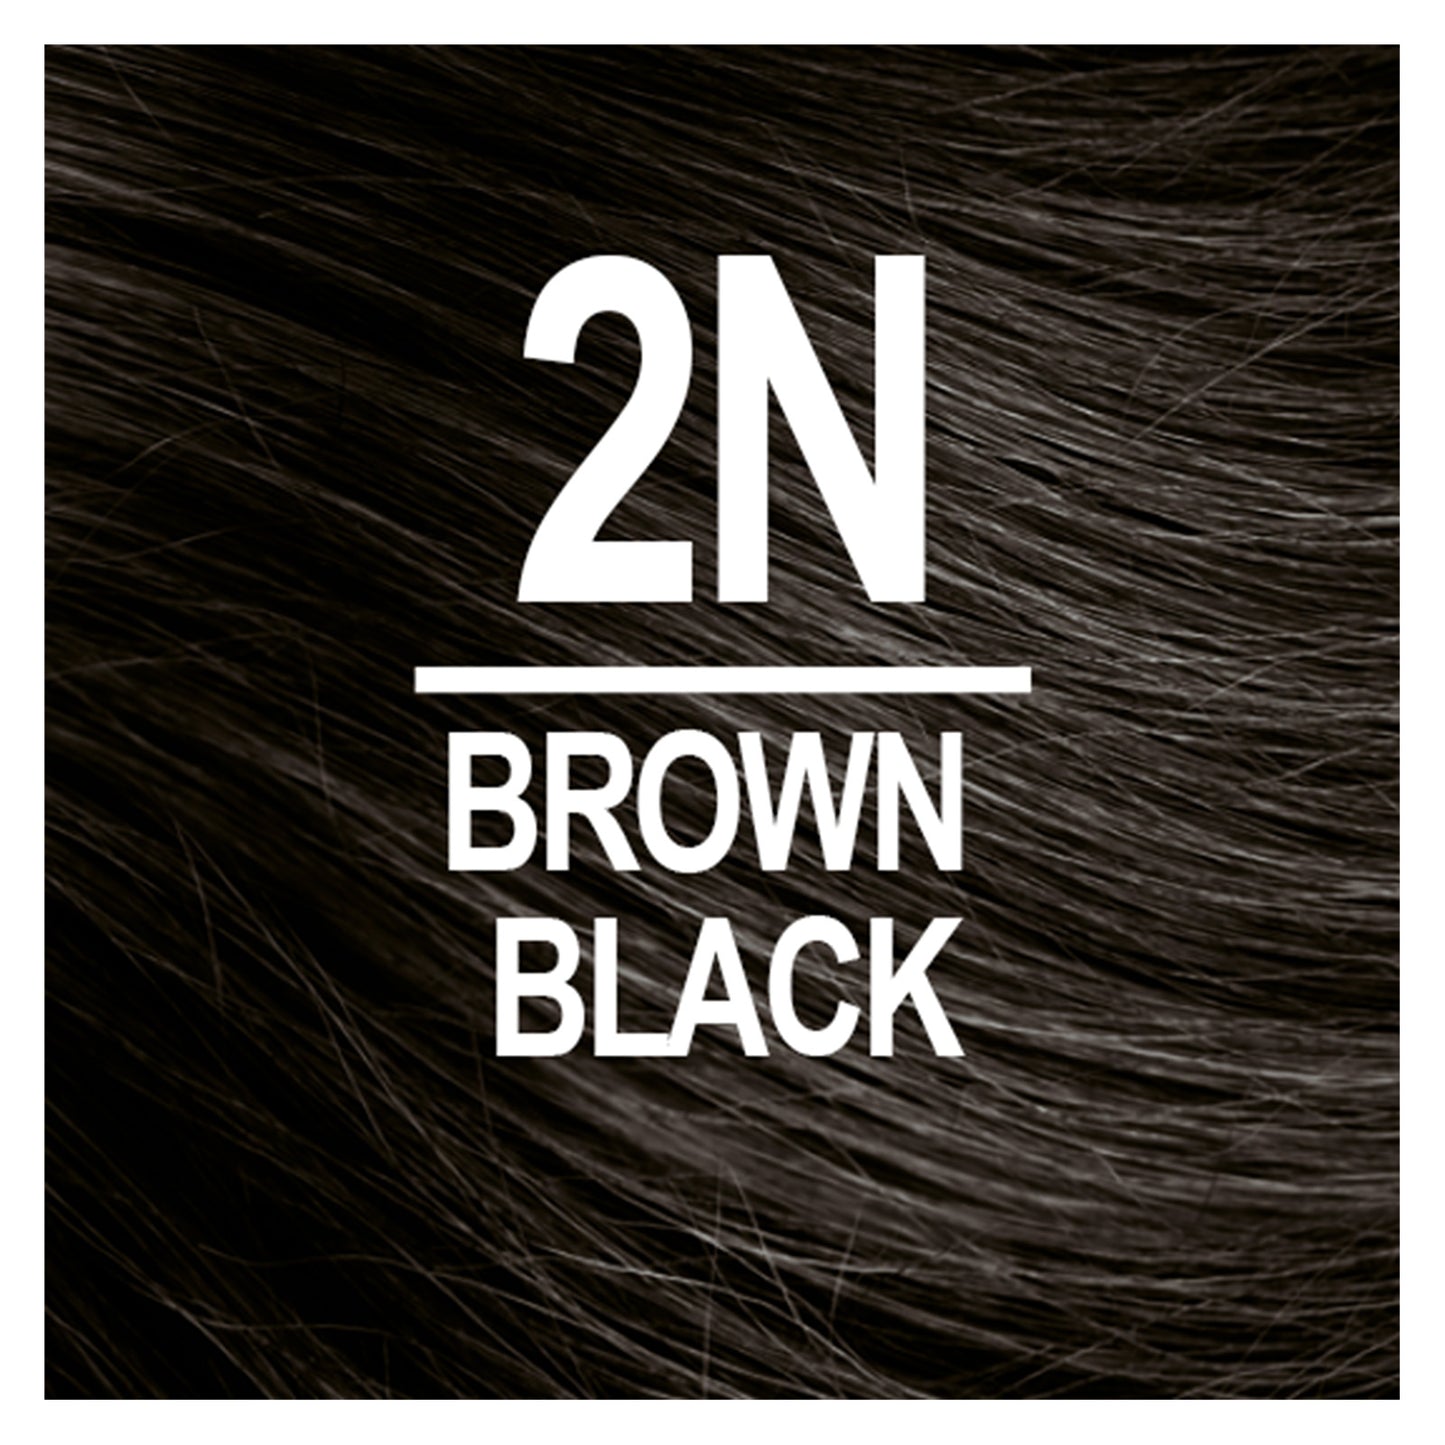 Naturtint Permanent Hair Color 2N Brown Black (Packaging may vary)